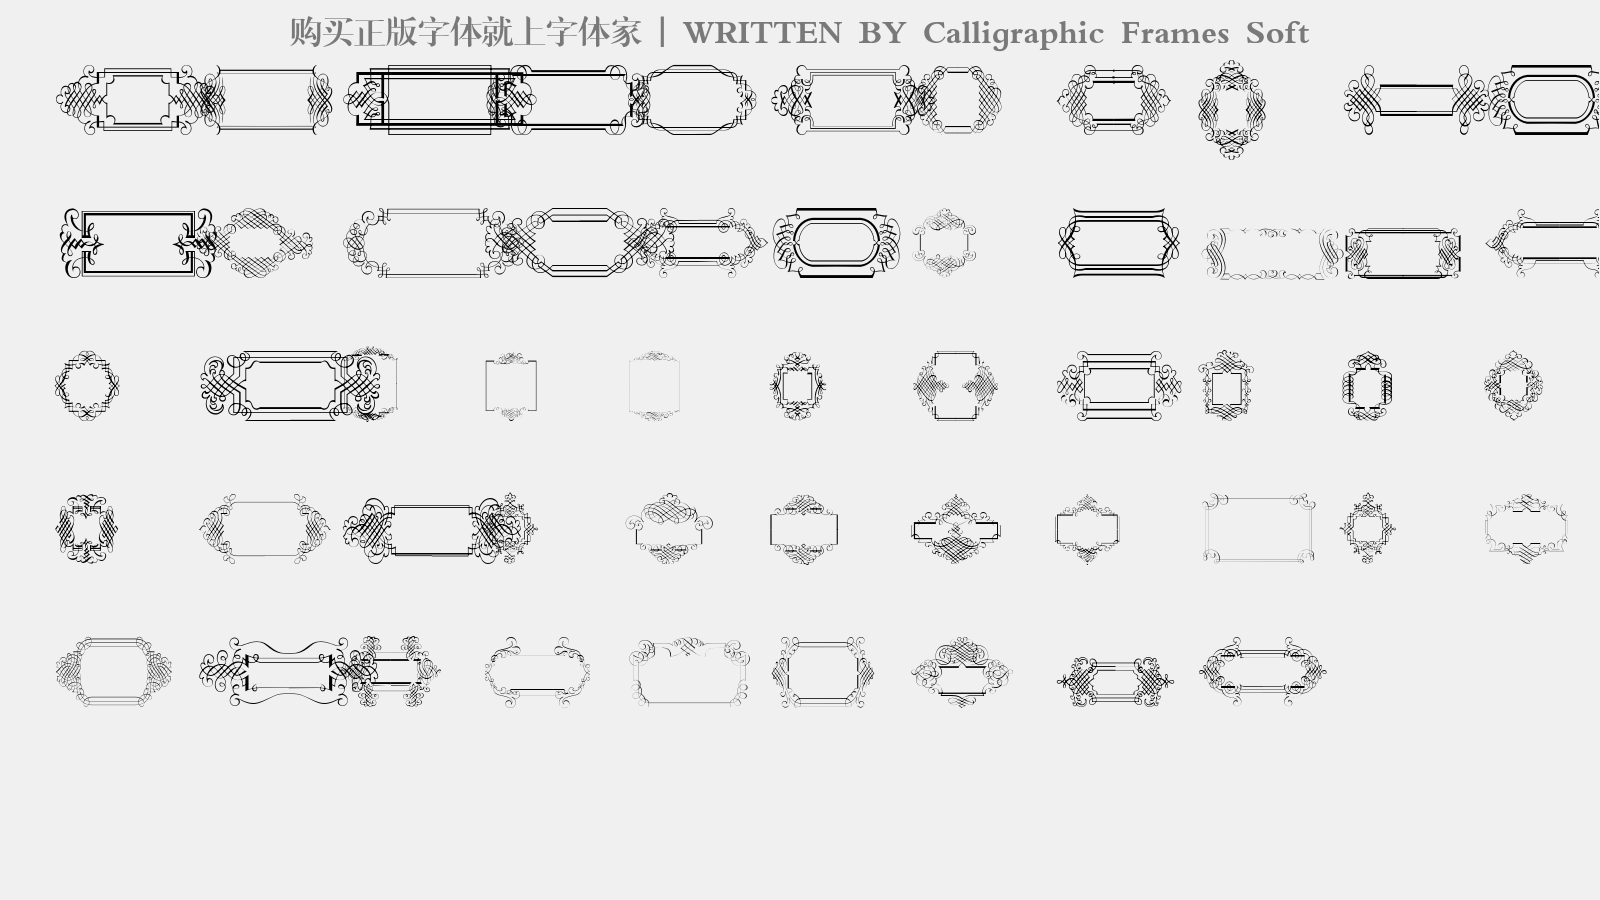 Calligraphic Frames Soft - 大写字母/小写字母/数字